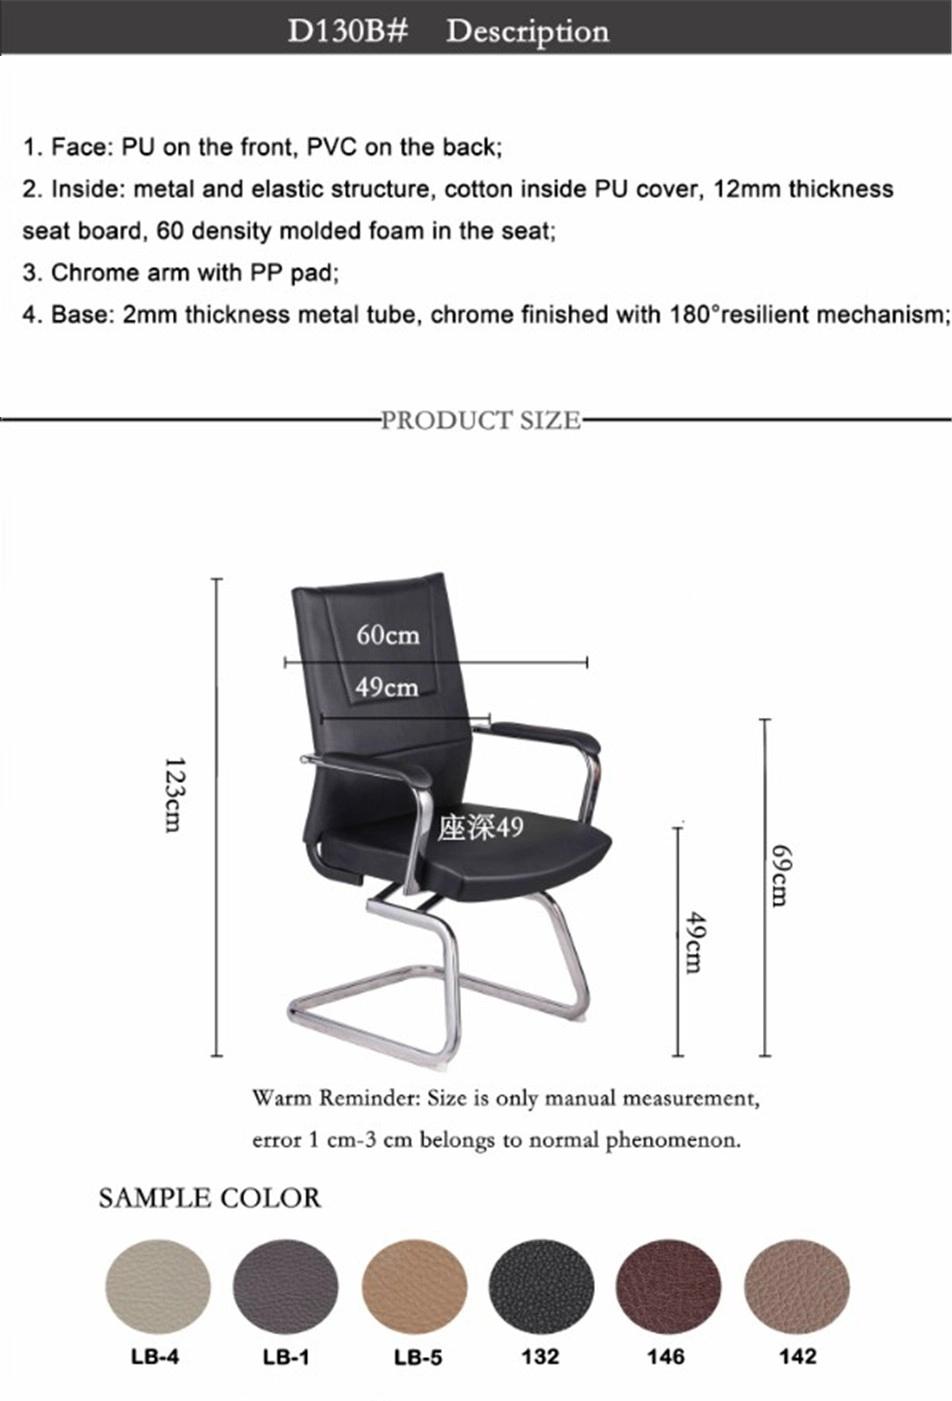 180deg Move No Wheel with Headrest High Back Work Chair Office Chair